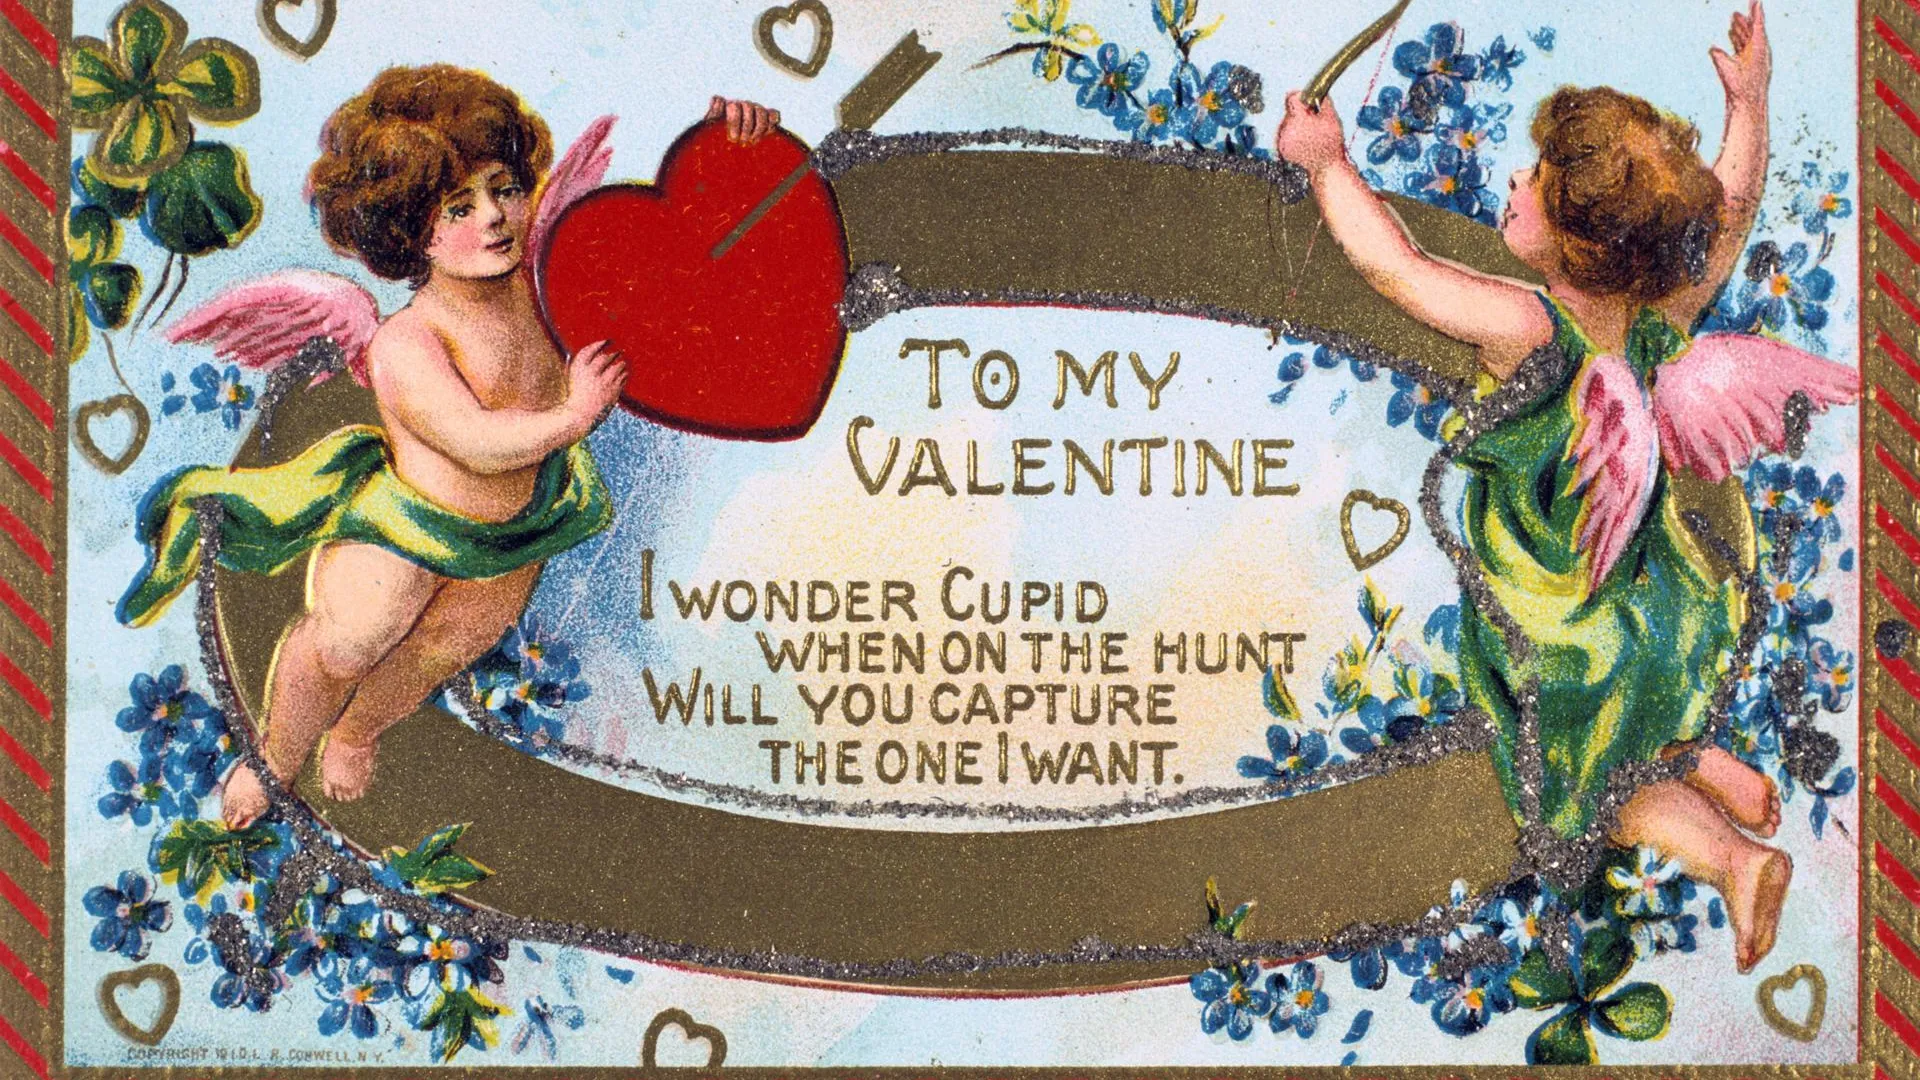 Валентинка начала ХХ века, США